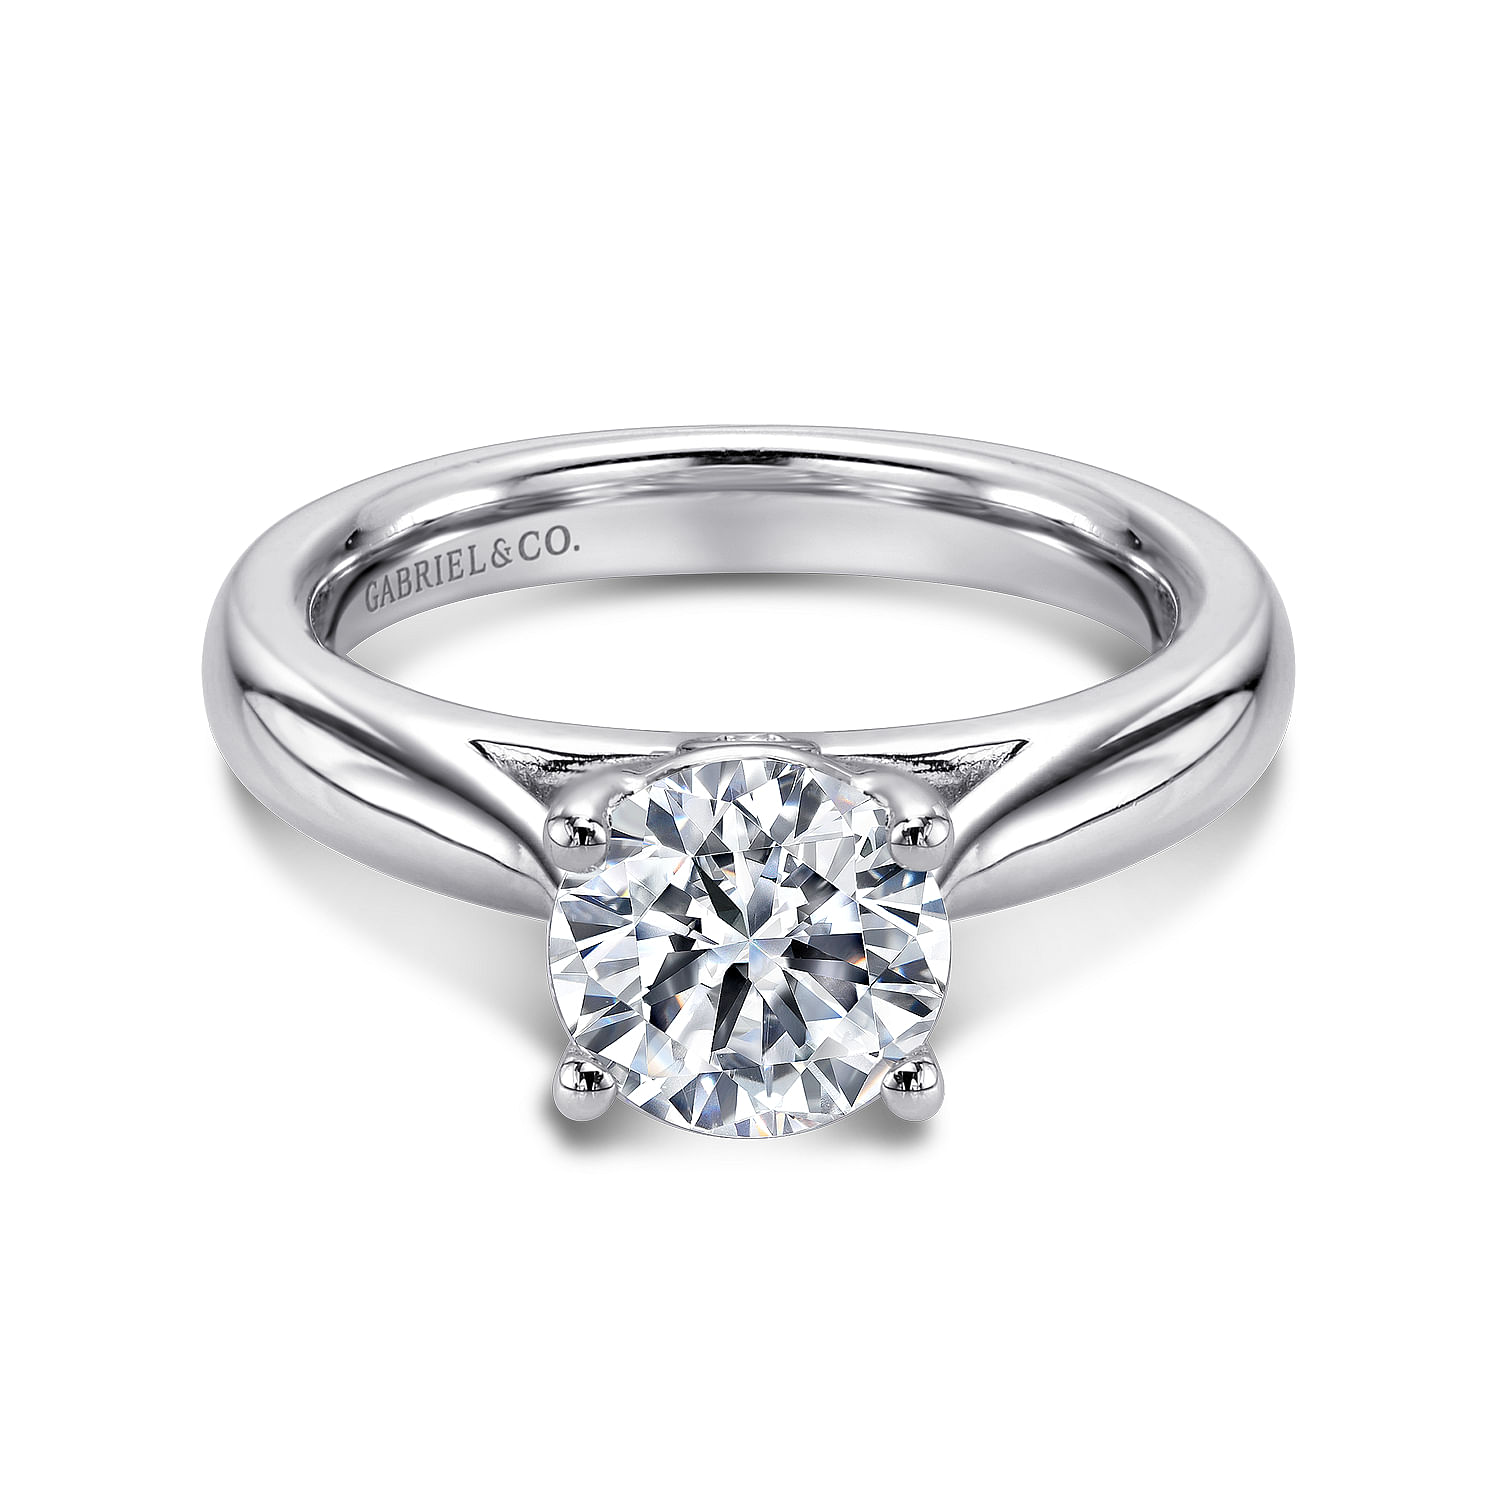 Polly - Platinum Round Diamond Engagement Ring